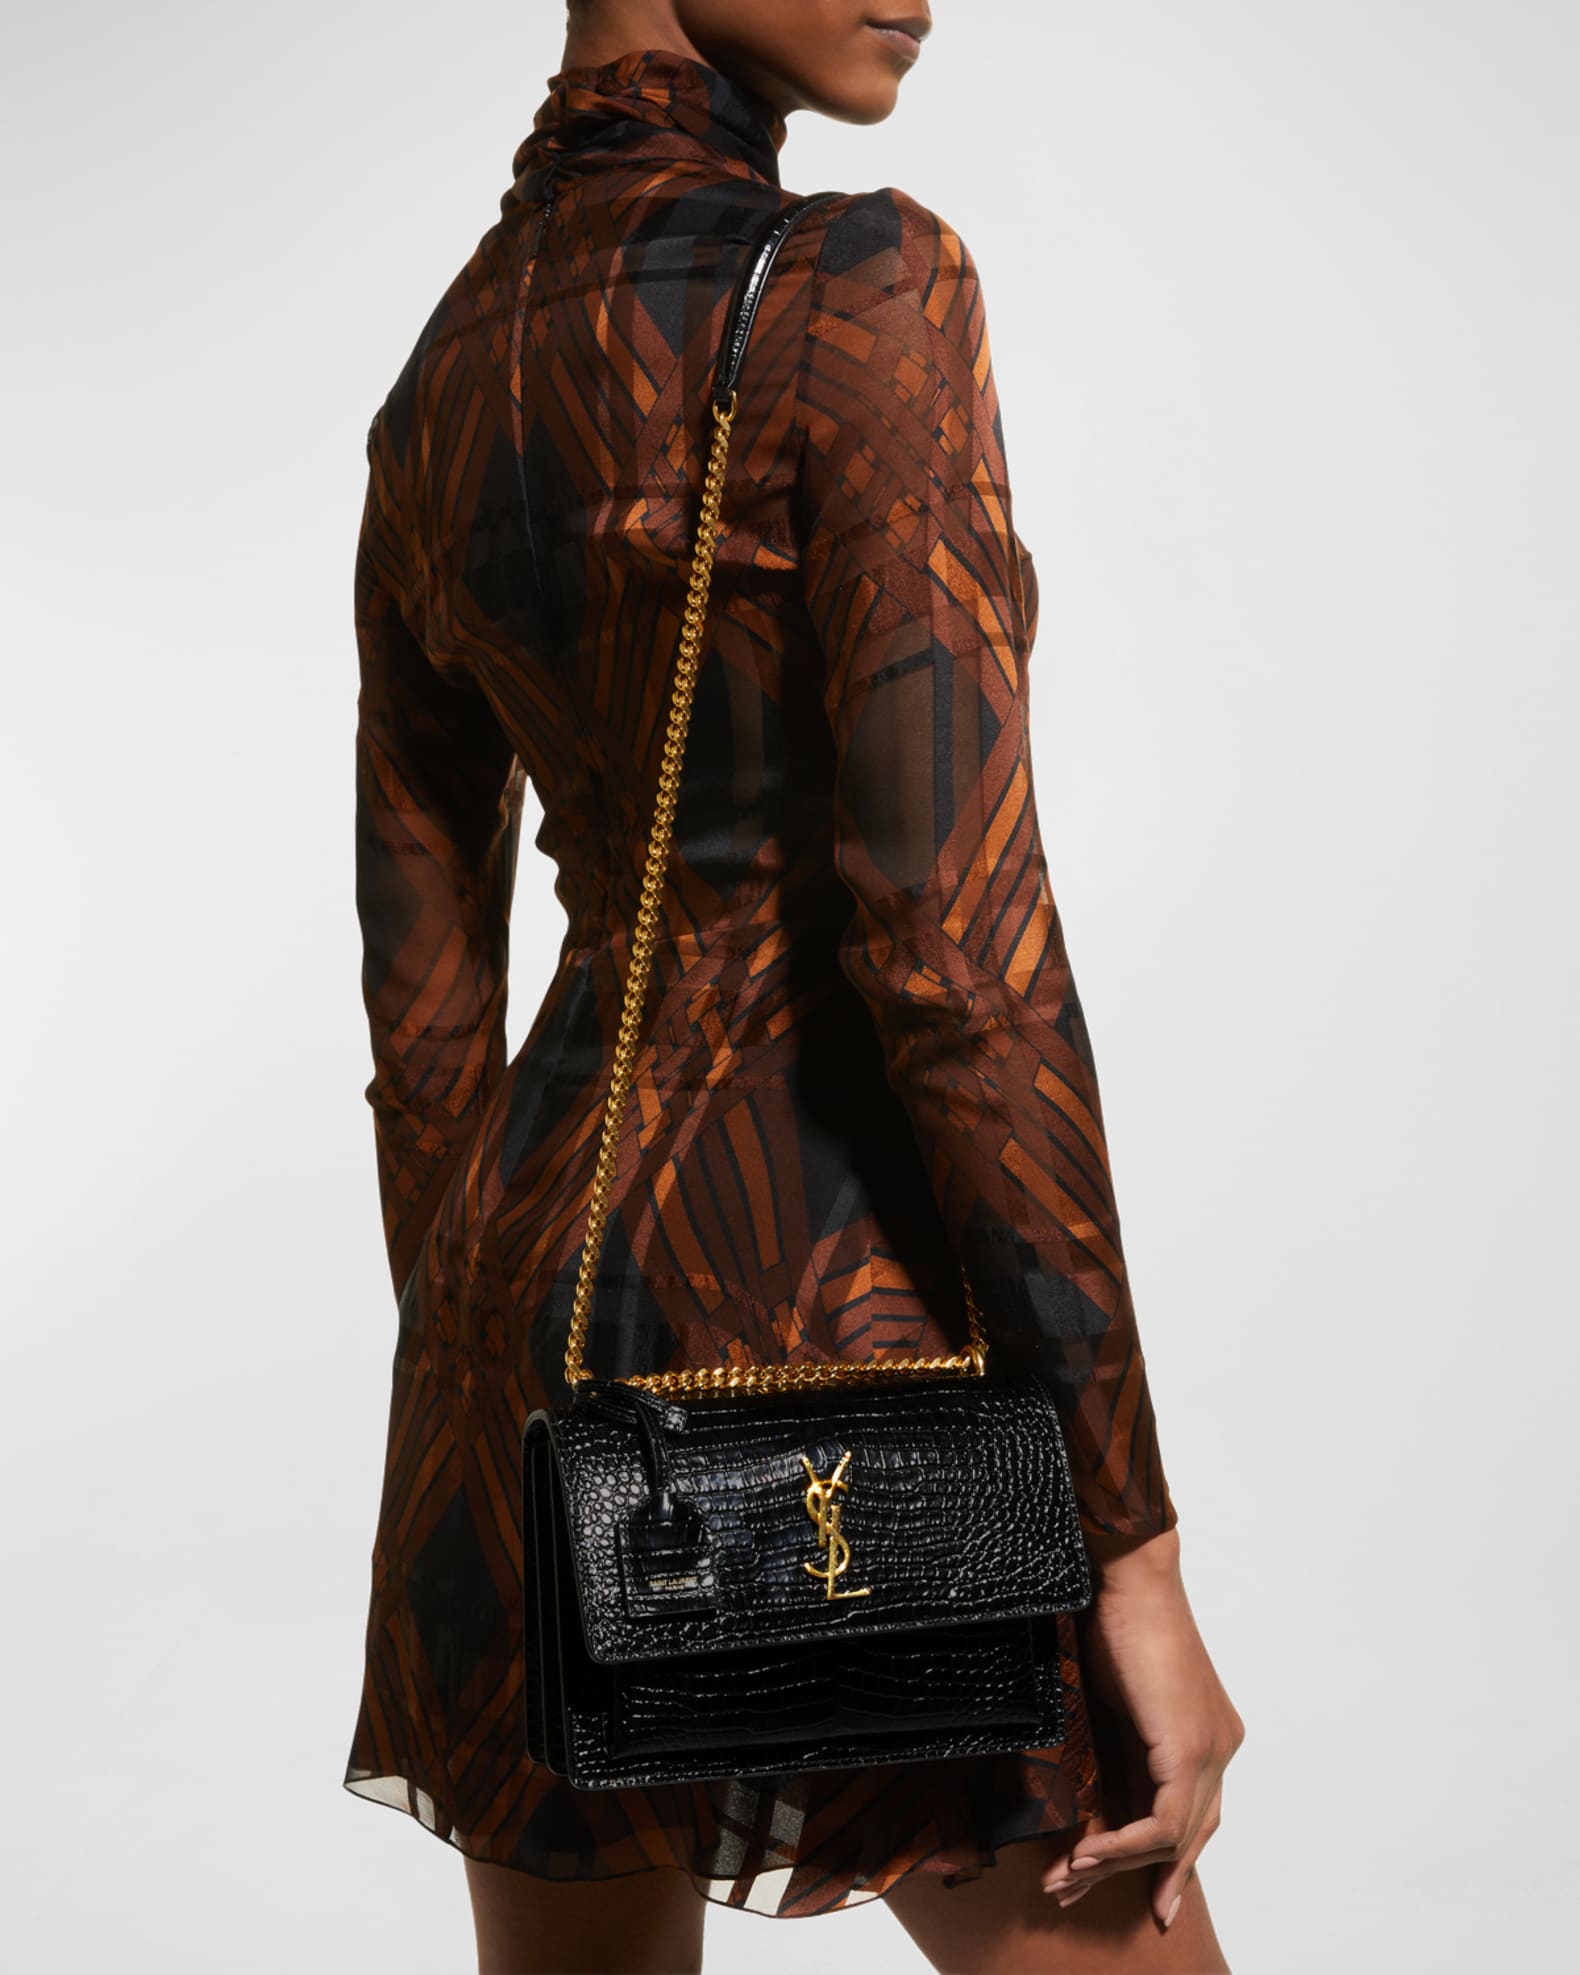 Trending Ysl Sunset Croc Bag For Lady (LAK032) - KDB Deals